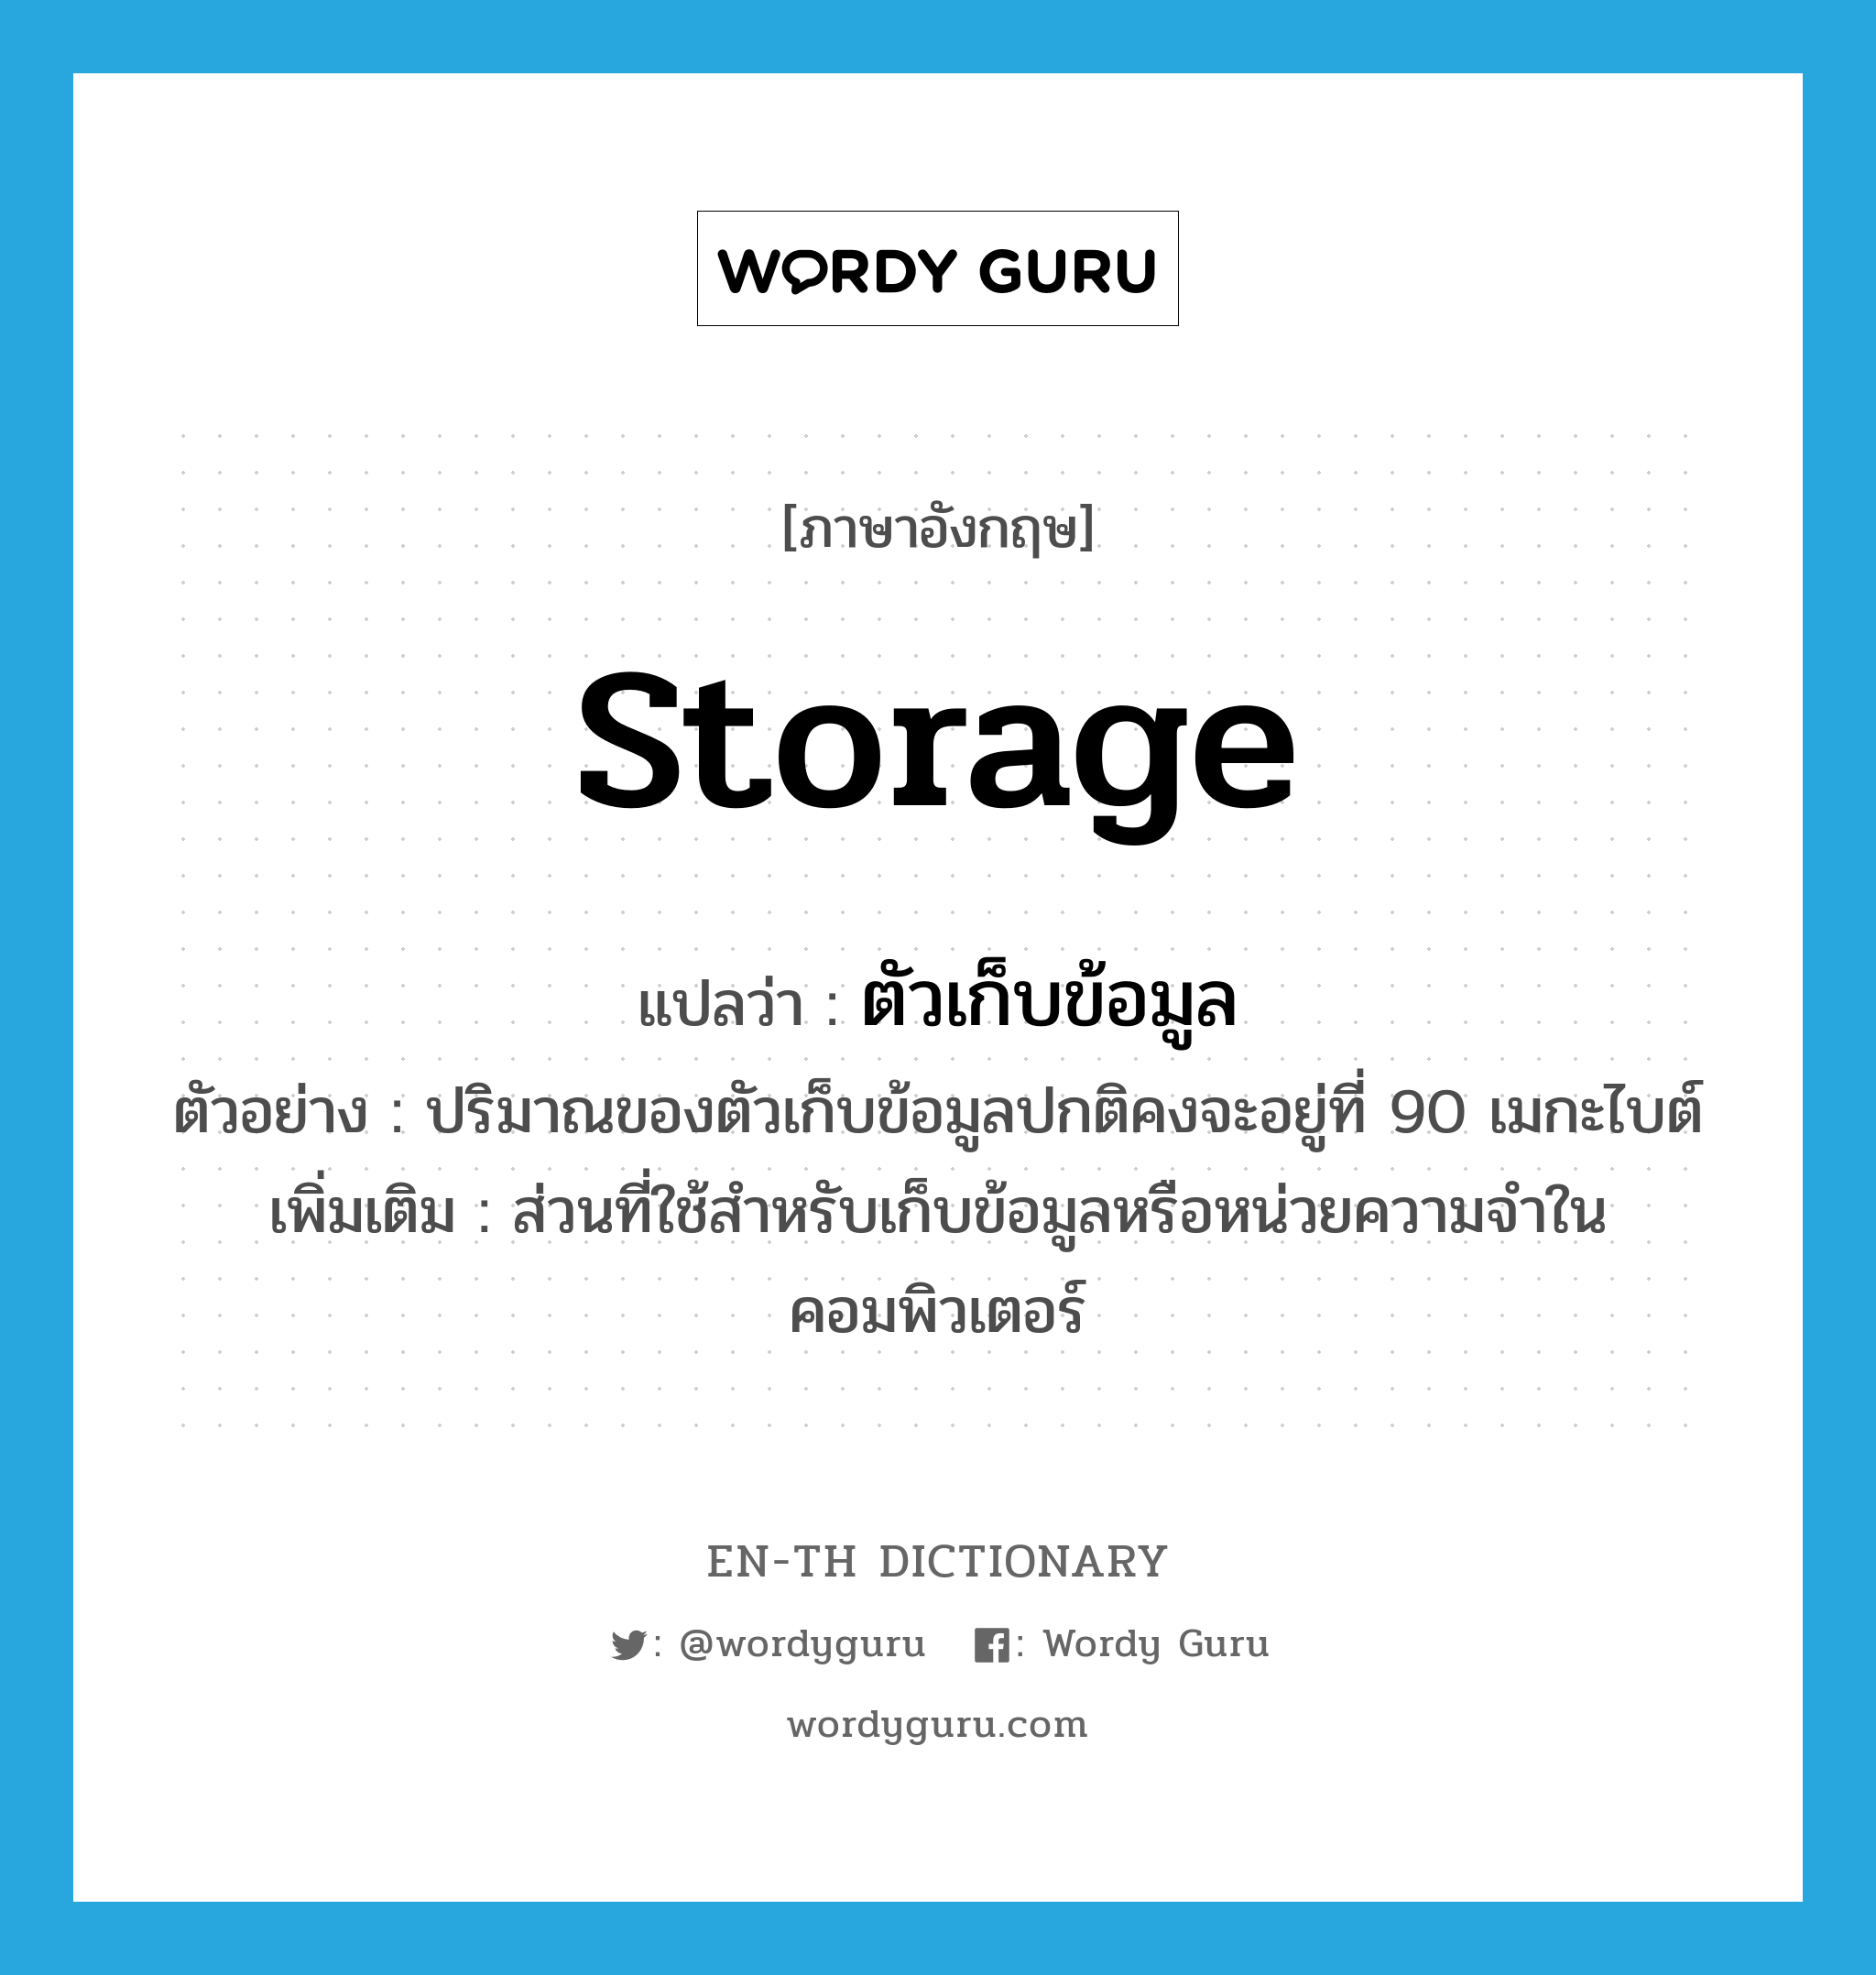 storage แปลว่า?, คำศัพท์ภาษาอังกฤษ storage แปลว่า ตัวเก็บข้อมูล ประเภท N ตัวอย่าง ปริมาณของตัวเก็บข้อมูลปกติคงจะอยู่ที่ 90 เมกะไบต์ เพิ่มเติม ส่วนที่ใช้สำหรับเก็บข้อมูลหรือหน่วยความจำในคอมพิวเตอร์ หมวด N